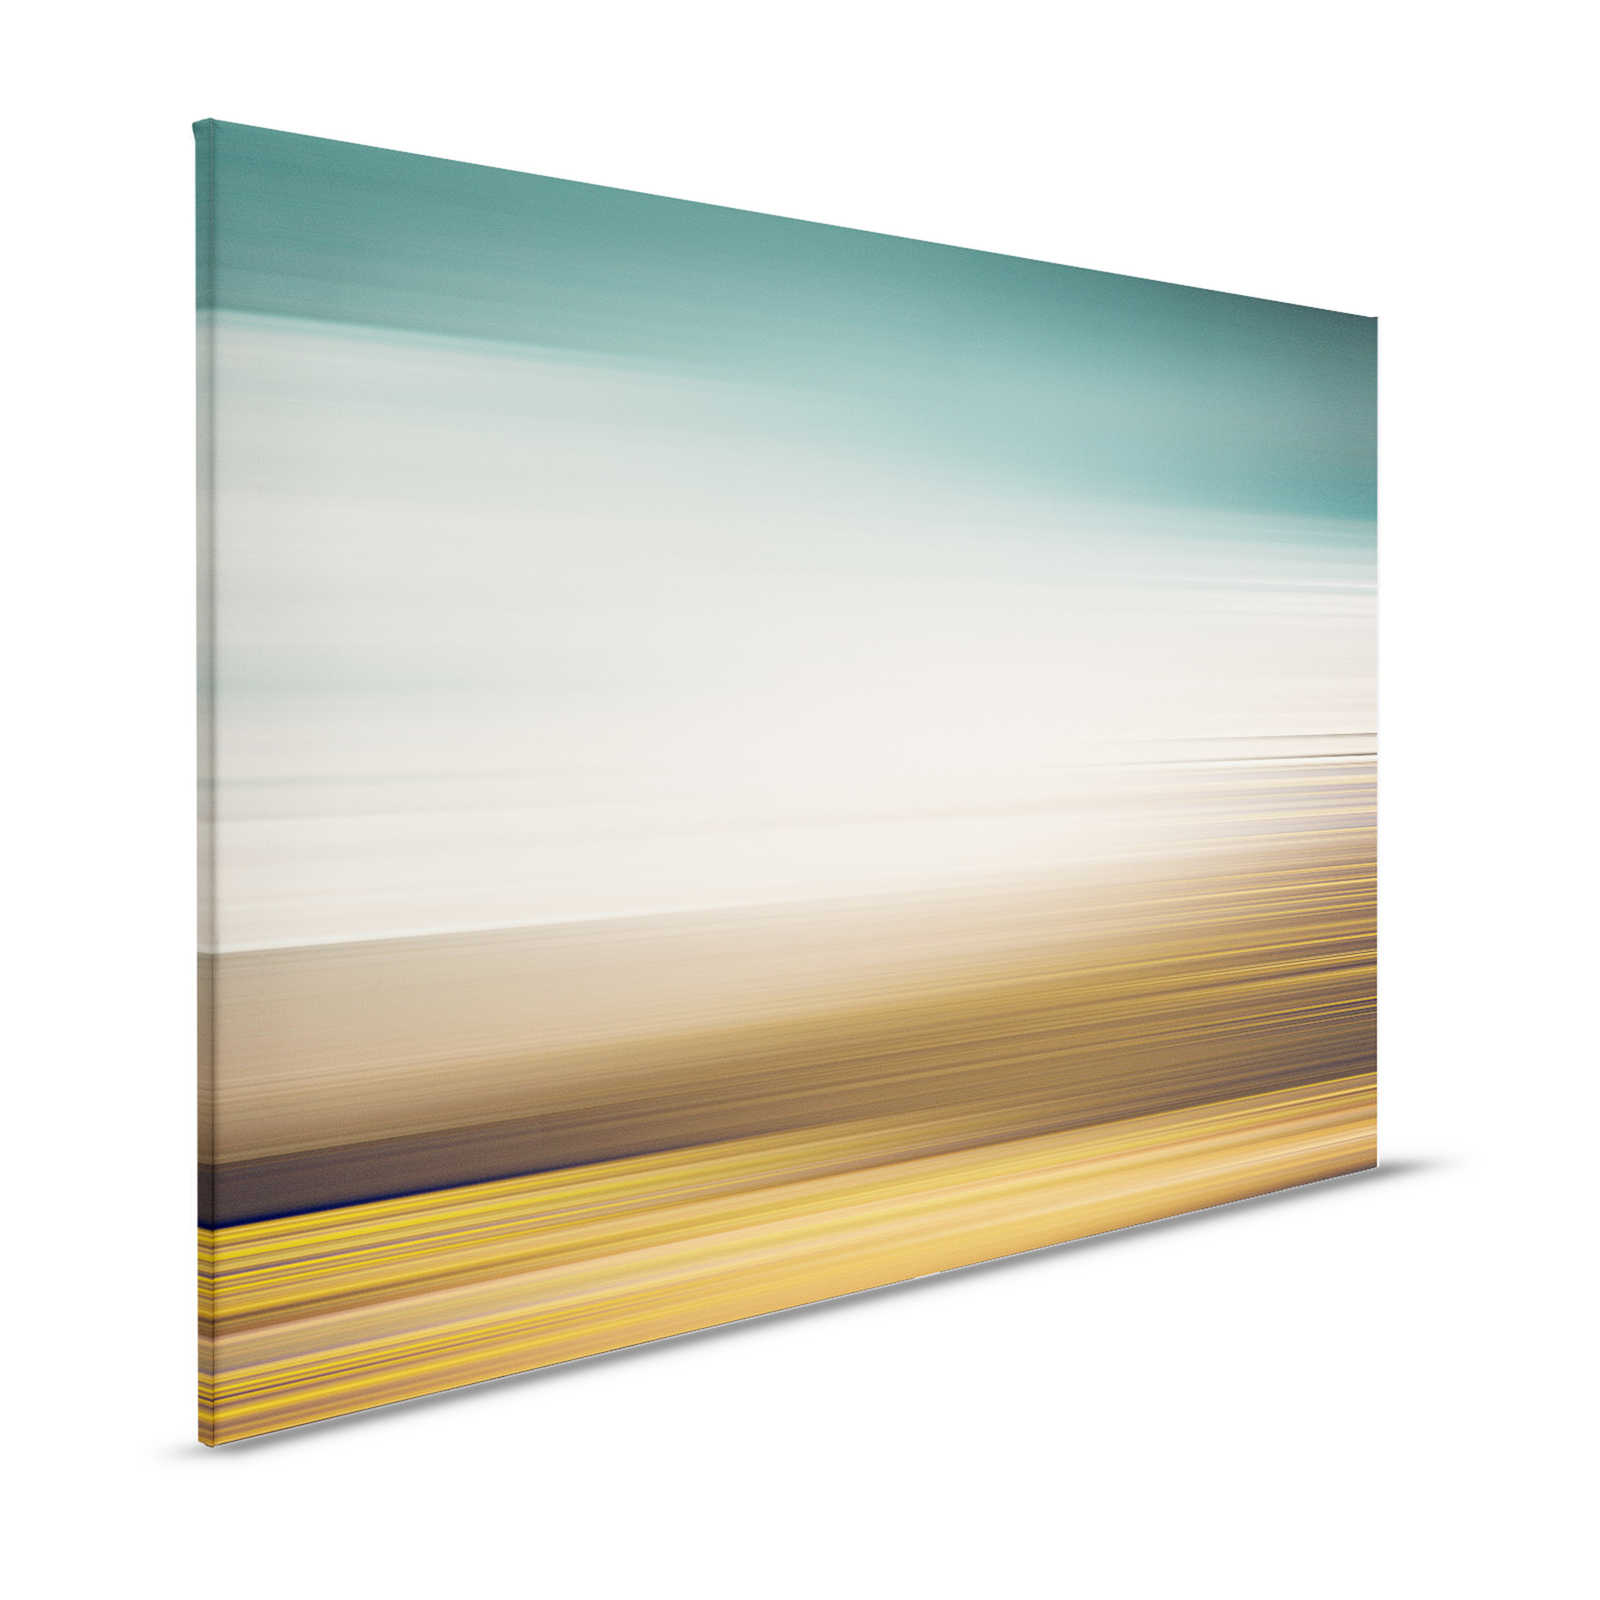 Horizon 3 - Leinwandbild Landschaft abstrakt mit Farbdesign – 1,20 m x 0,80 m
